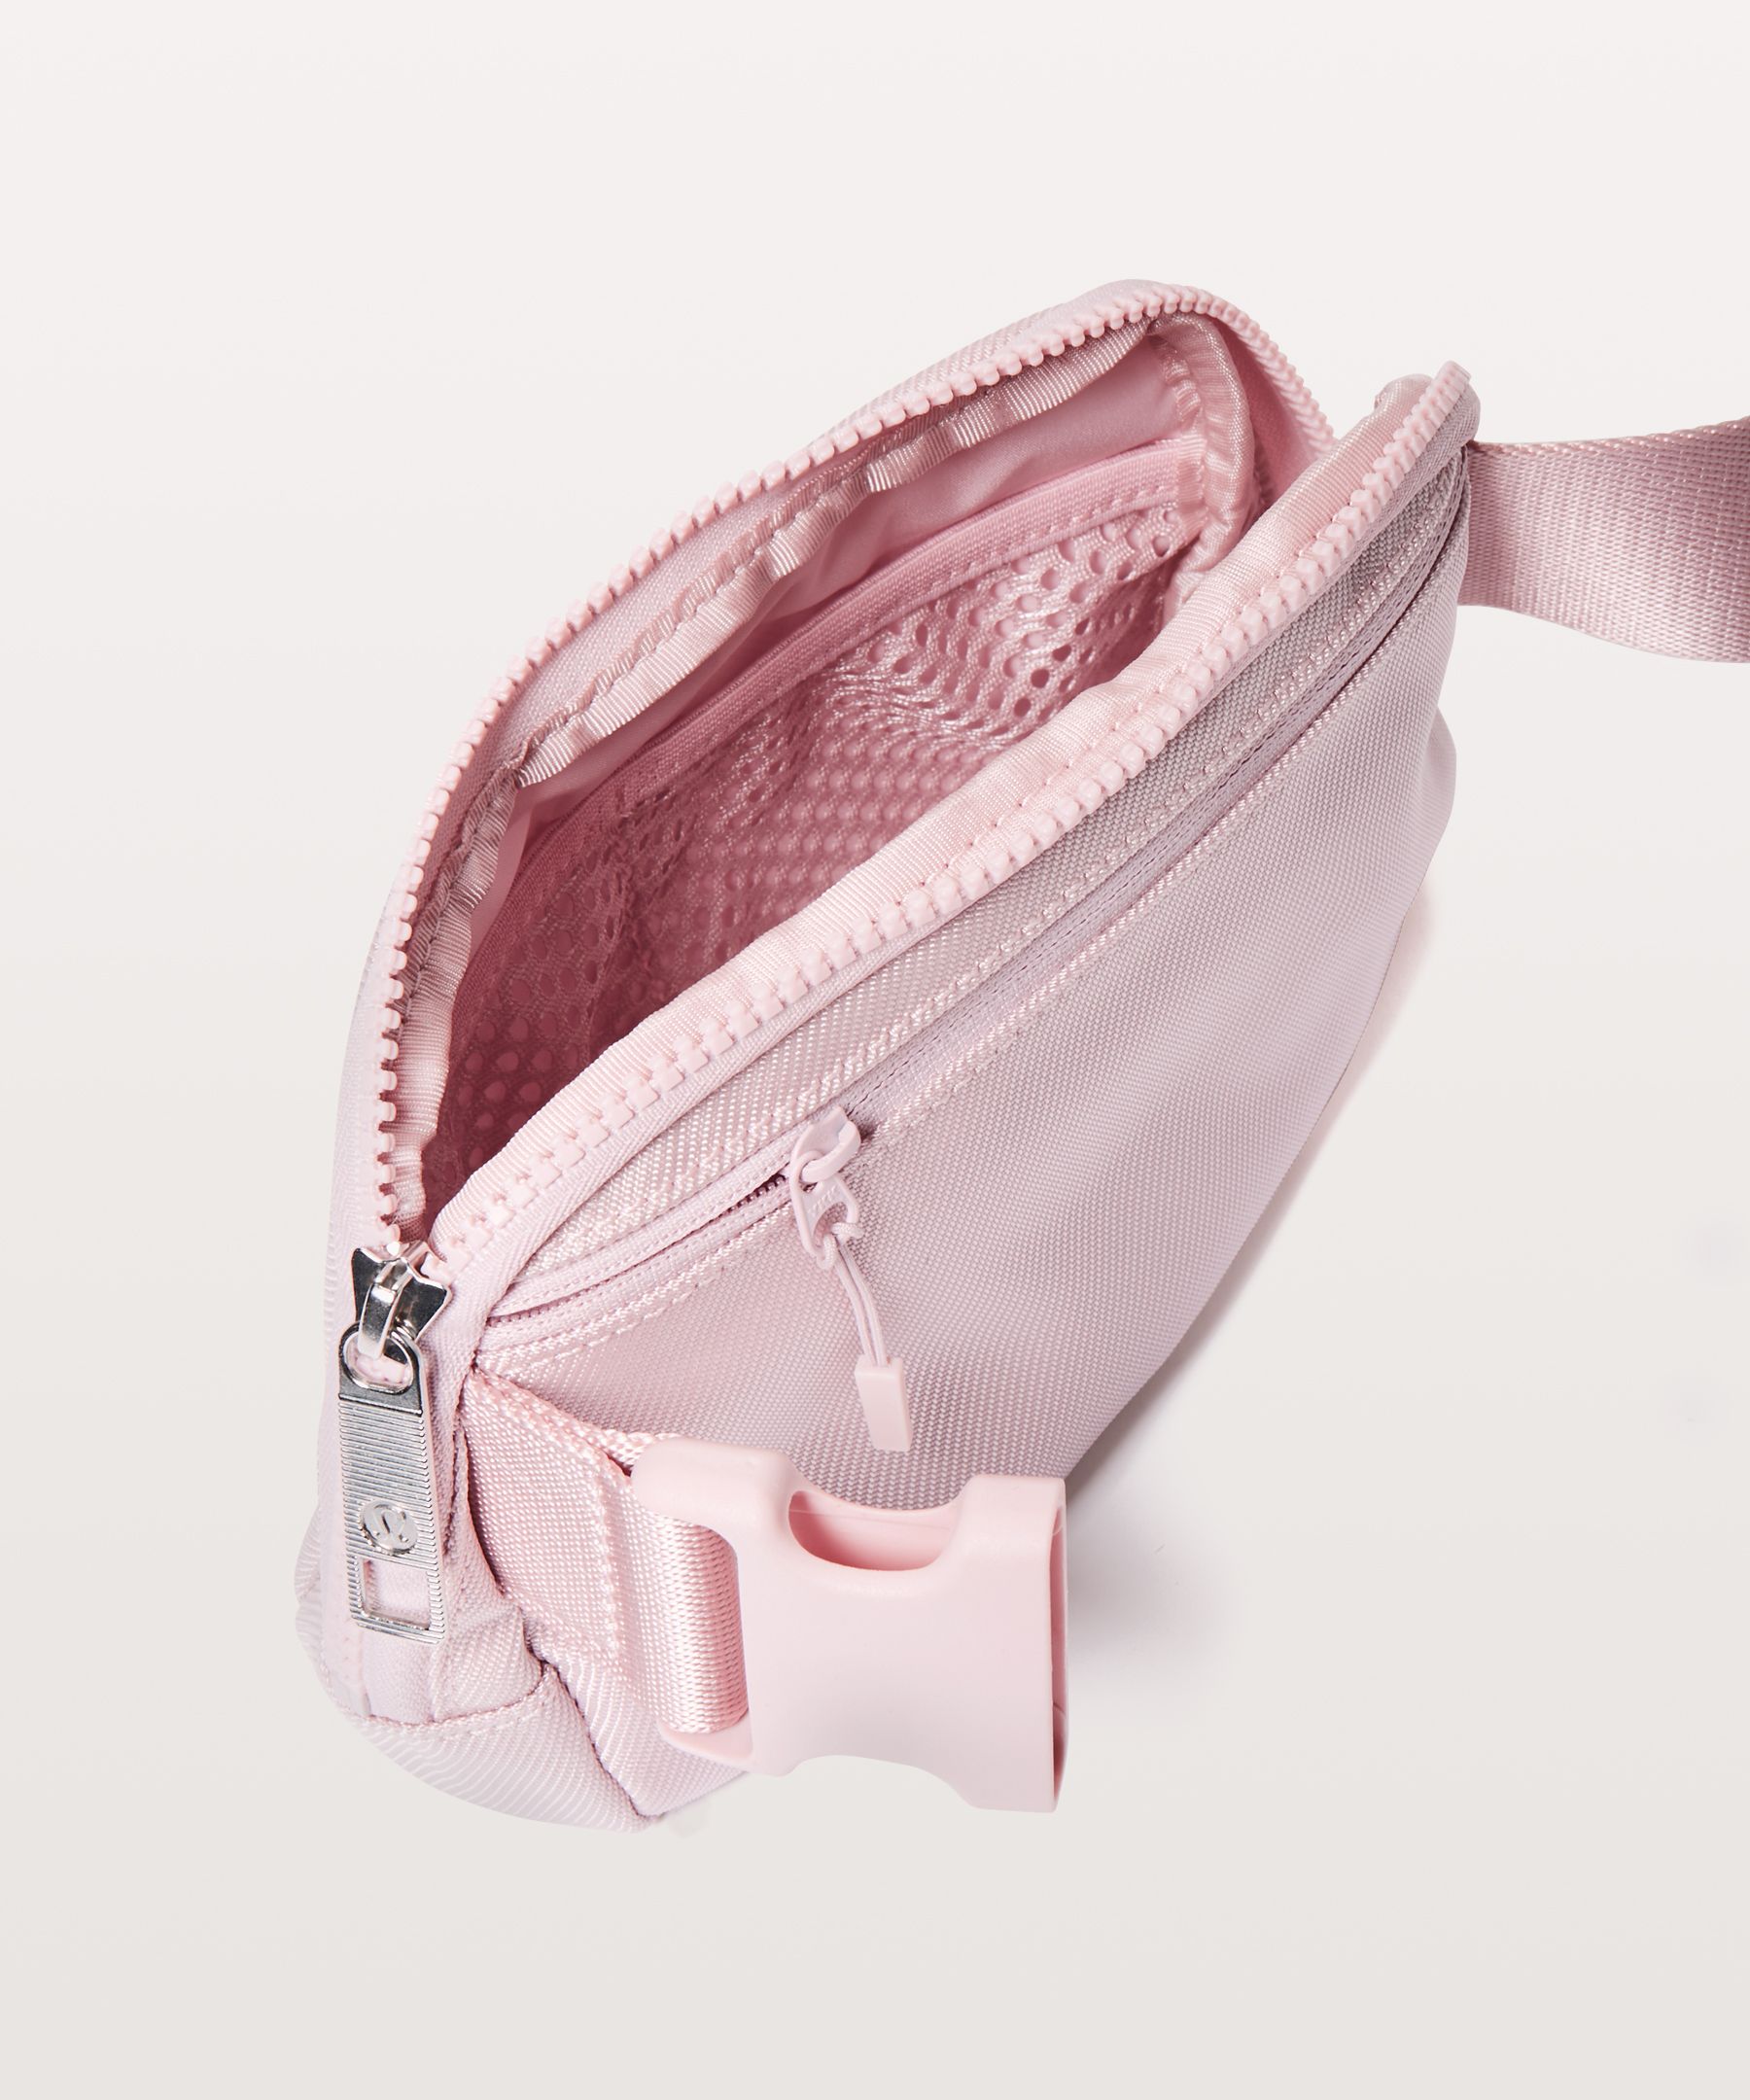 lululemon fanny pack pink